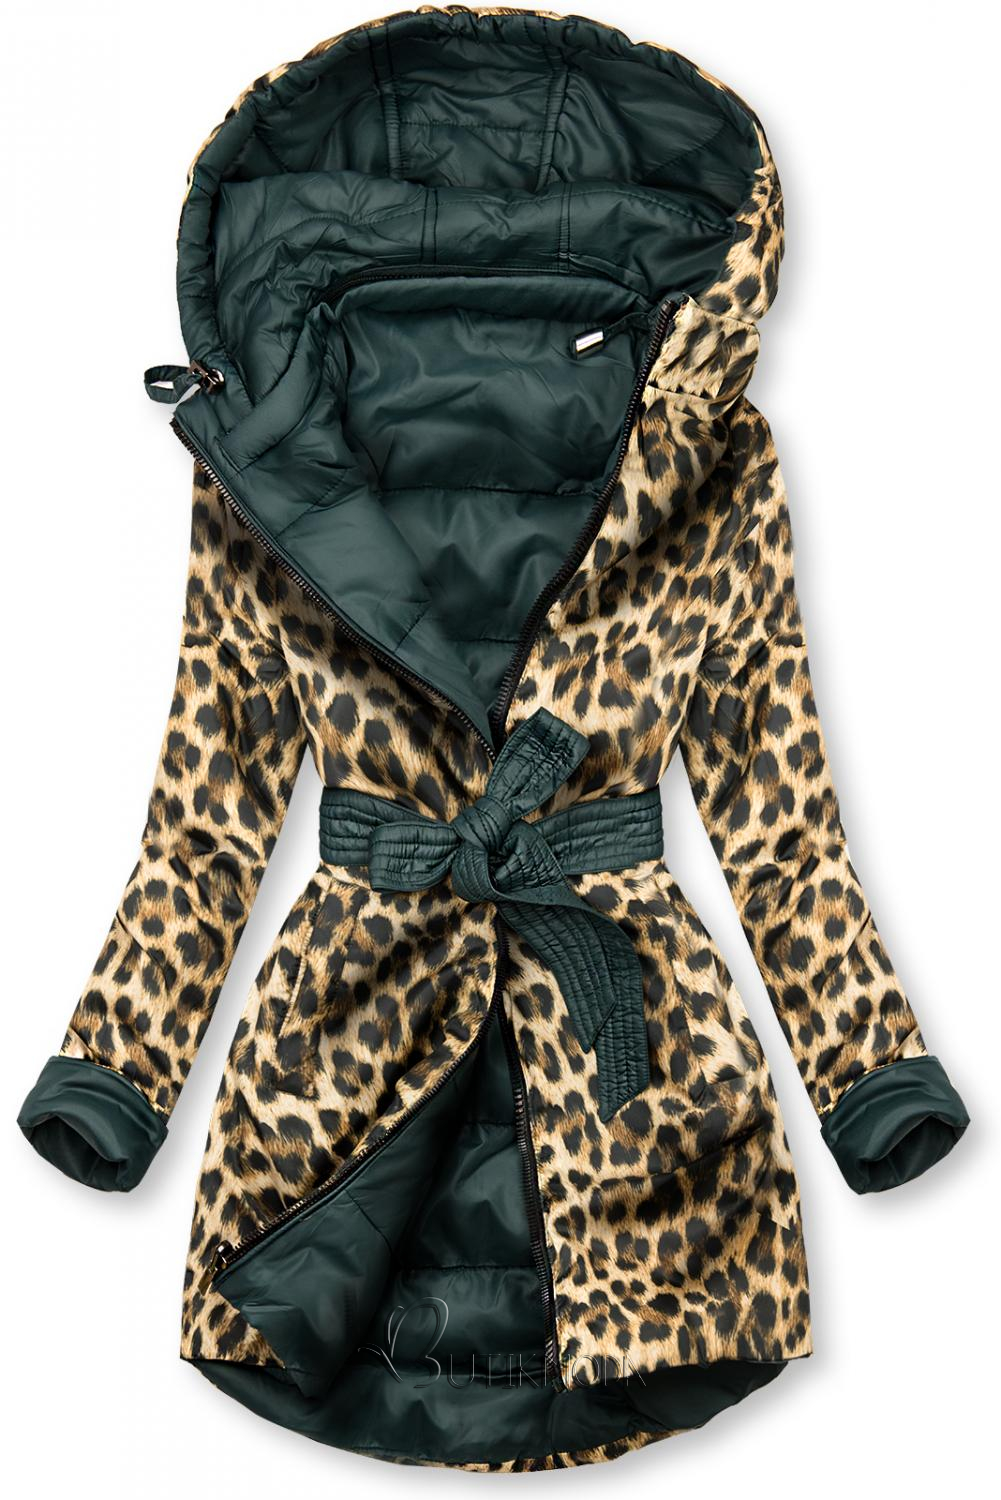 Green/leopard print reversible jacket